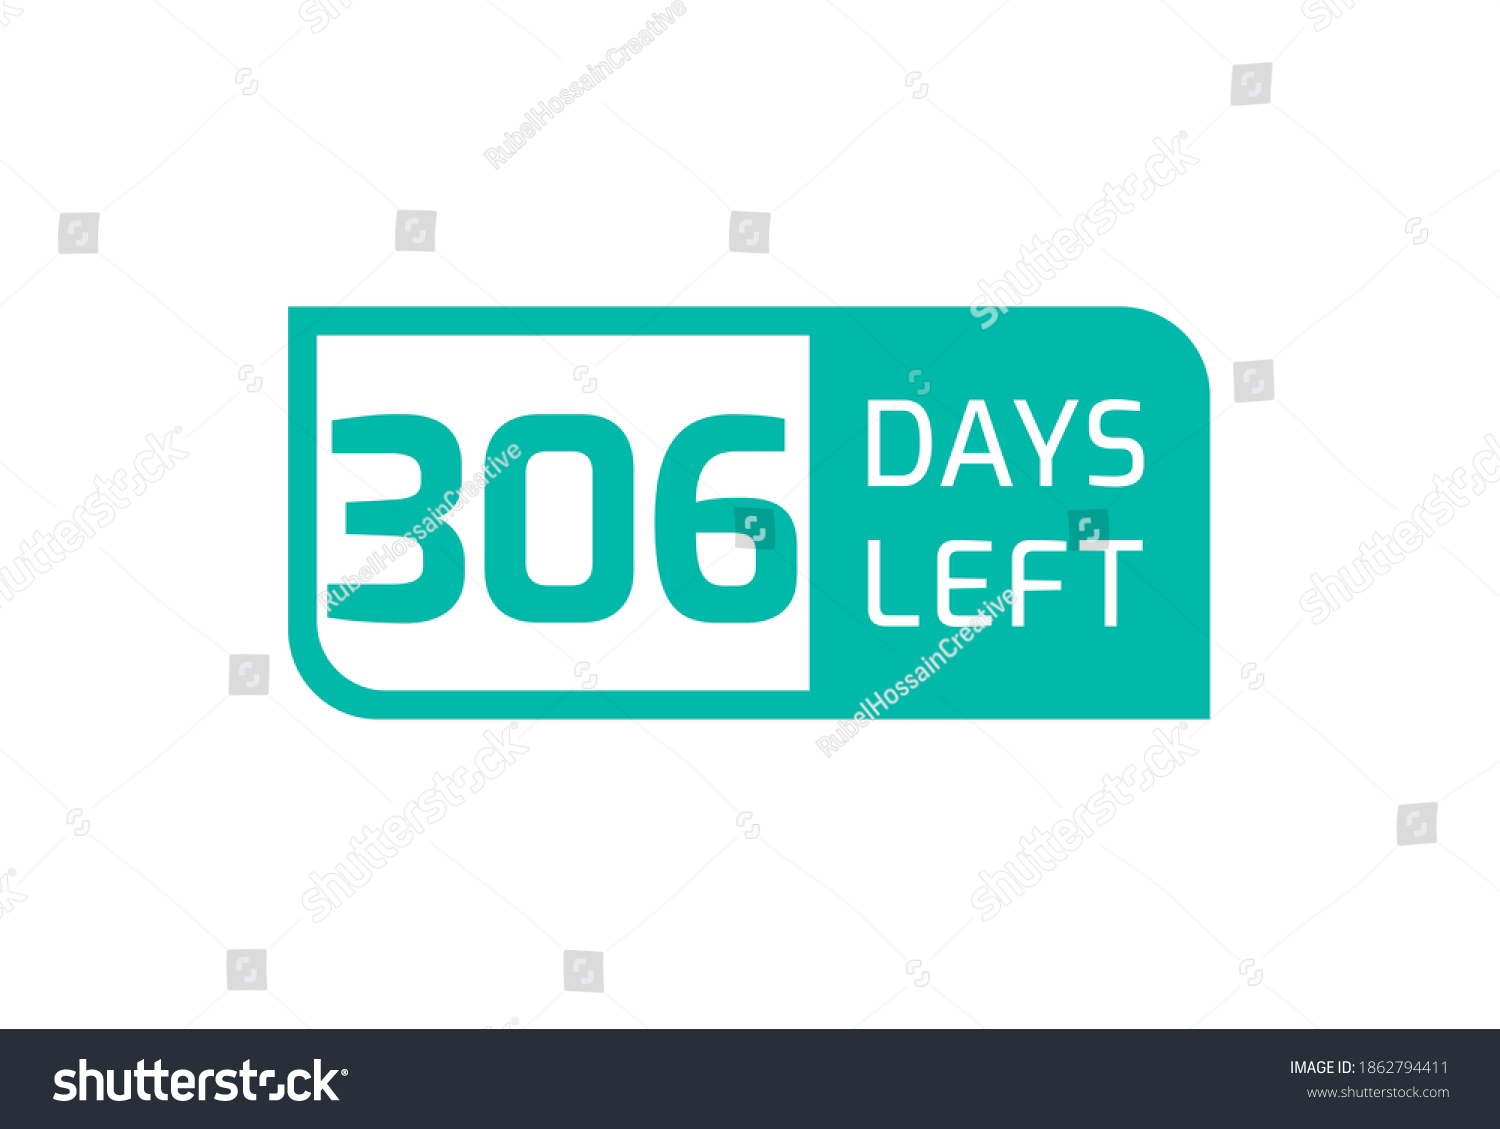 SVG of 306 Days Left banner on white background, 306 Days Left to Go svg